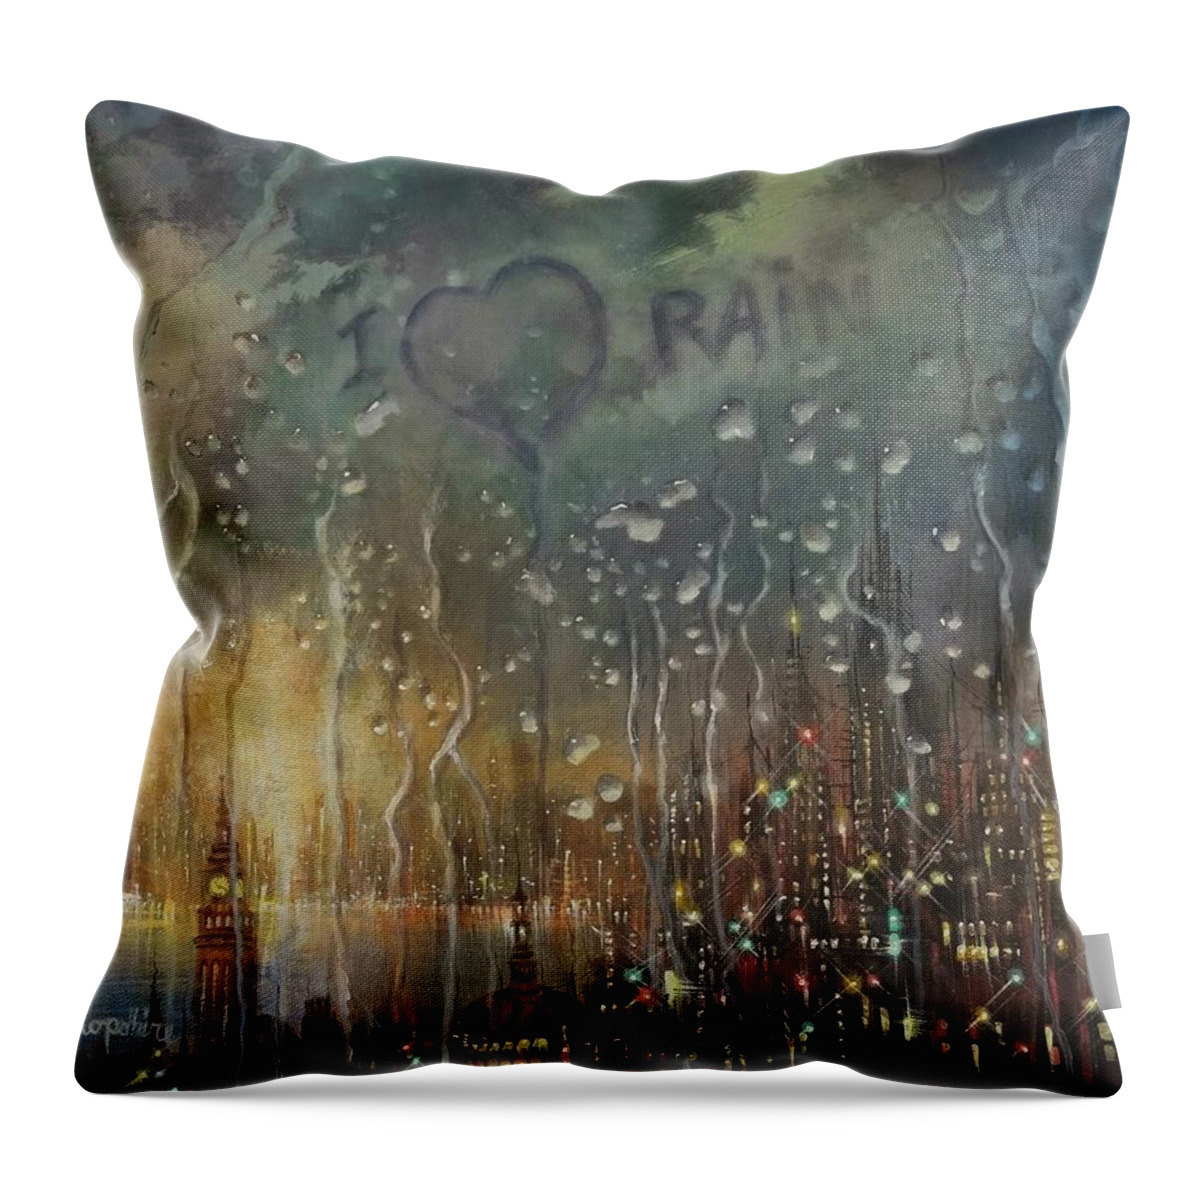 Rain Throw Pillow featuring the painting I Love Rain by Tom Shropshire